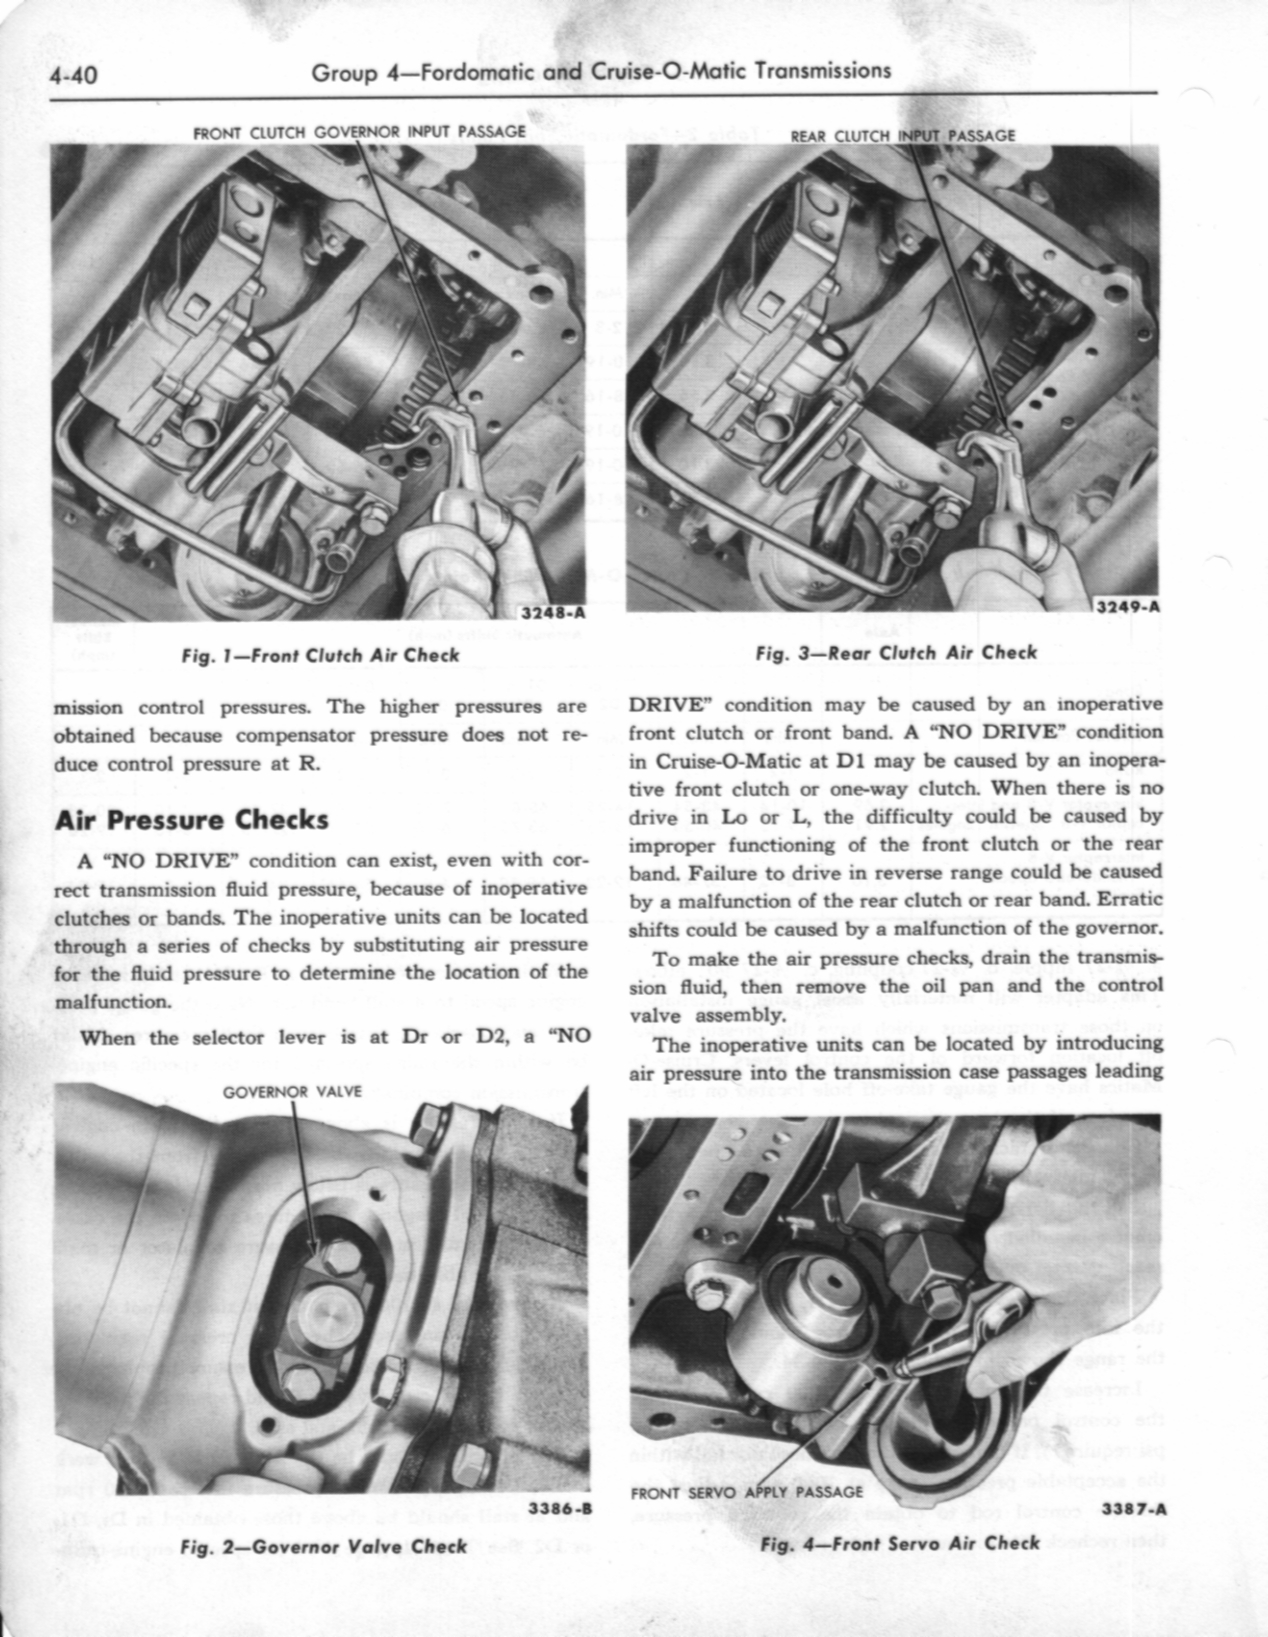 Ford cruise-o-matic transmission fluid #2